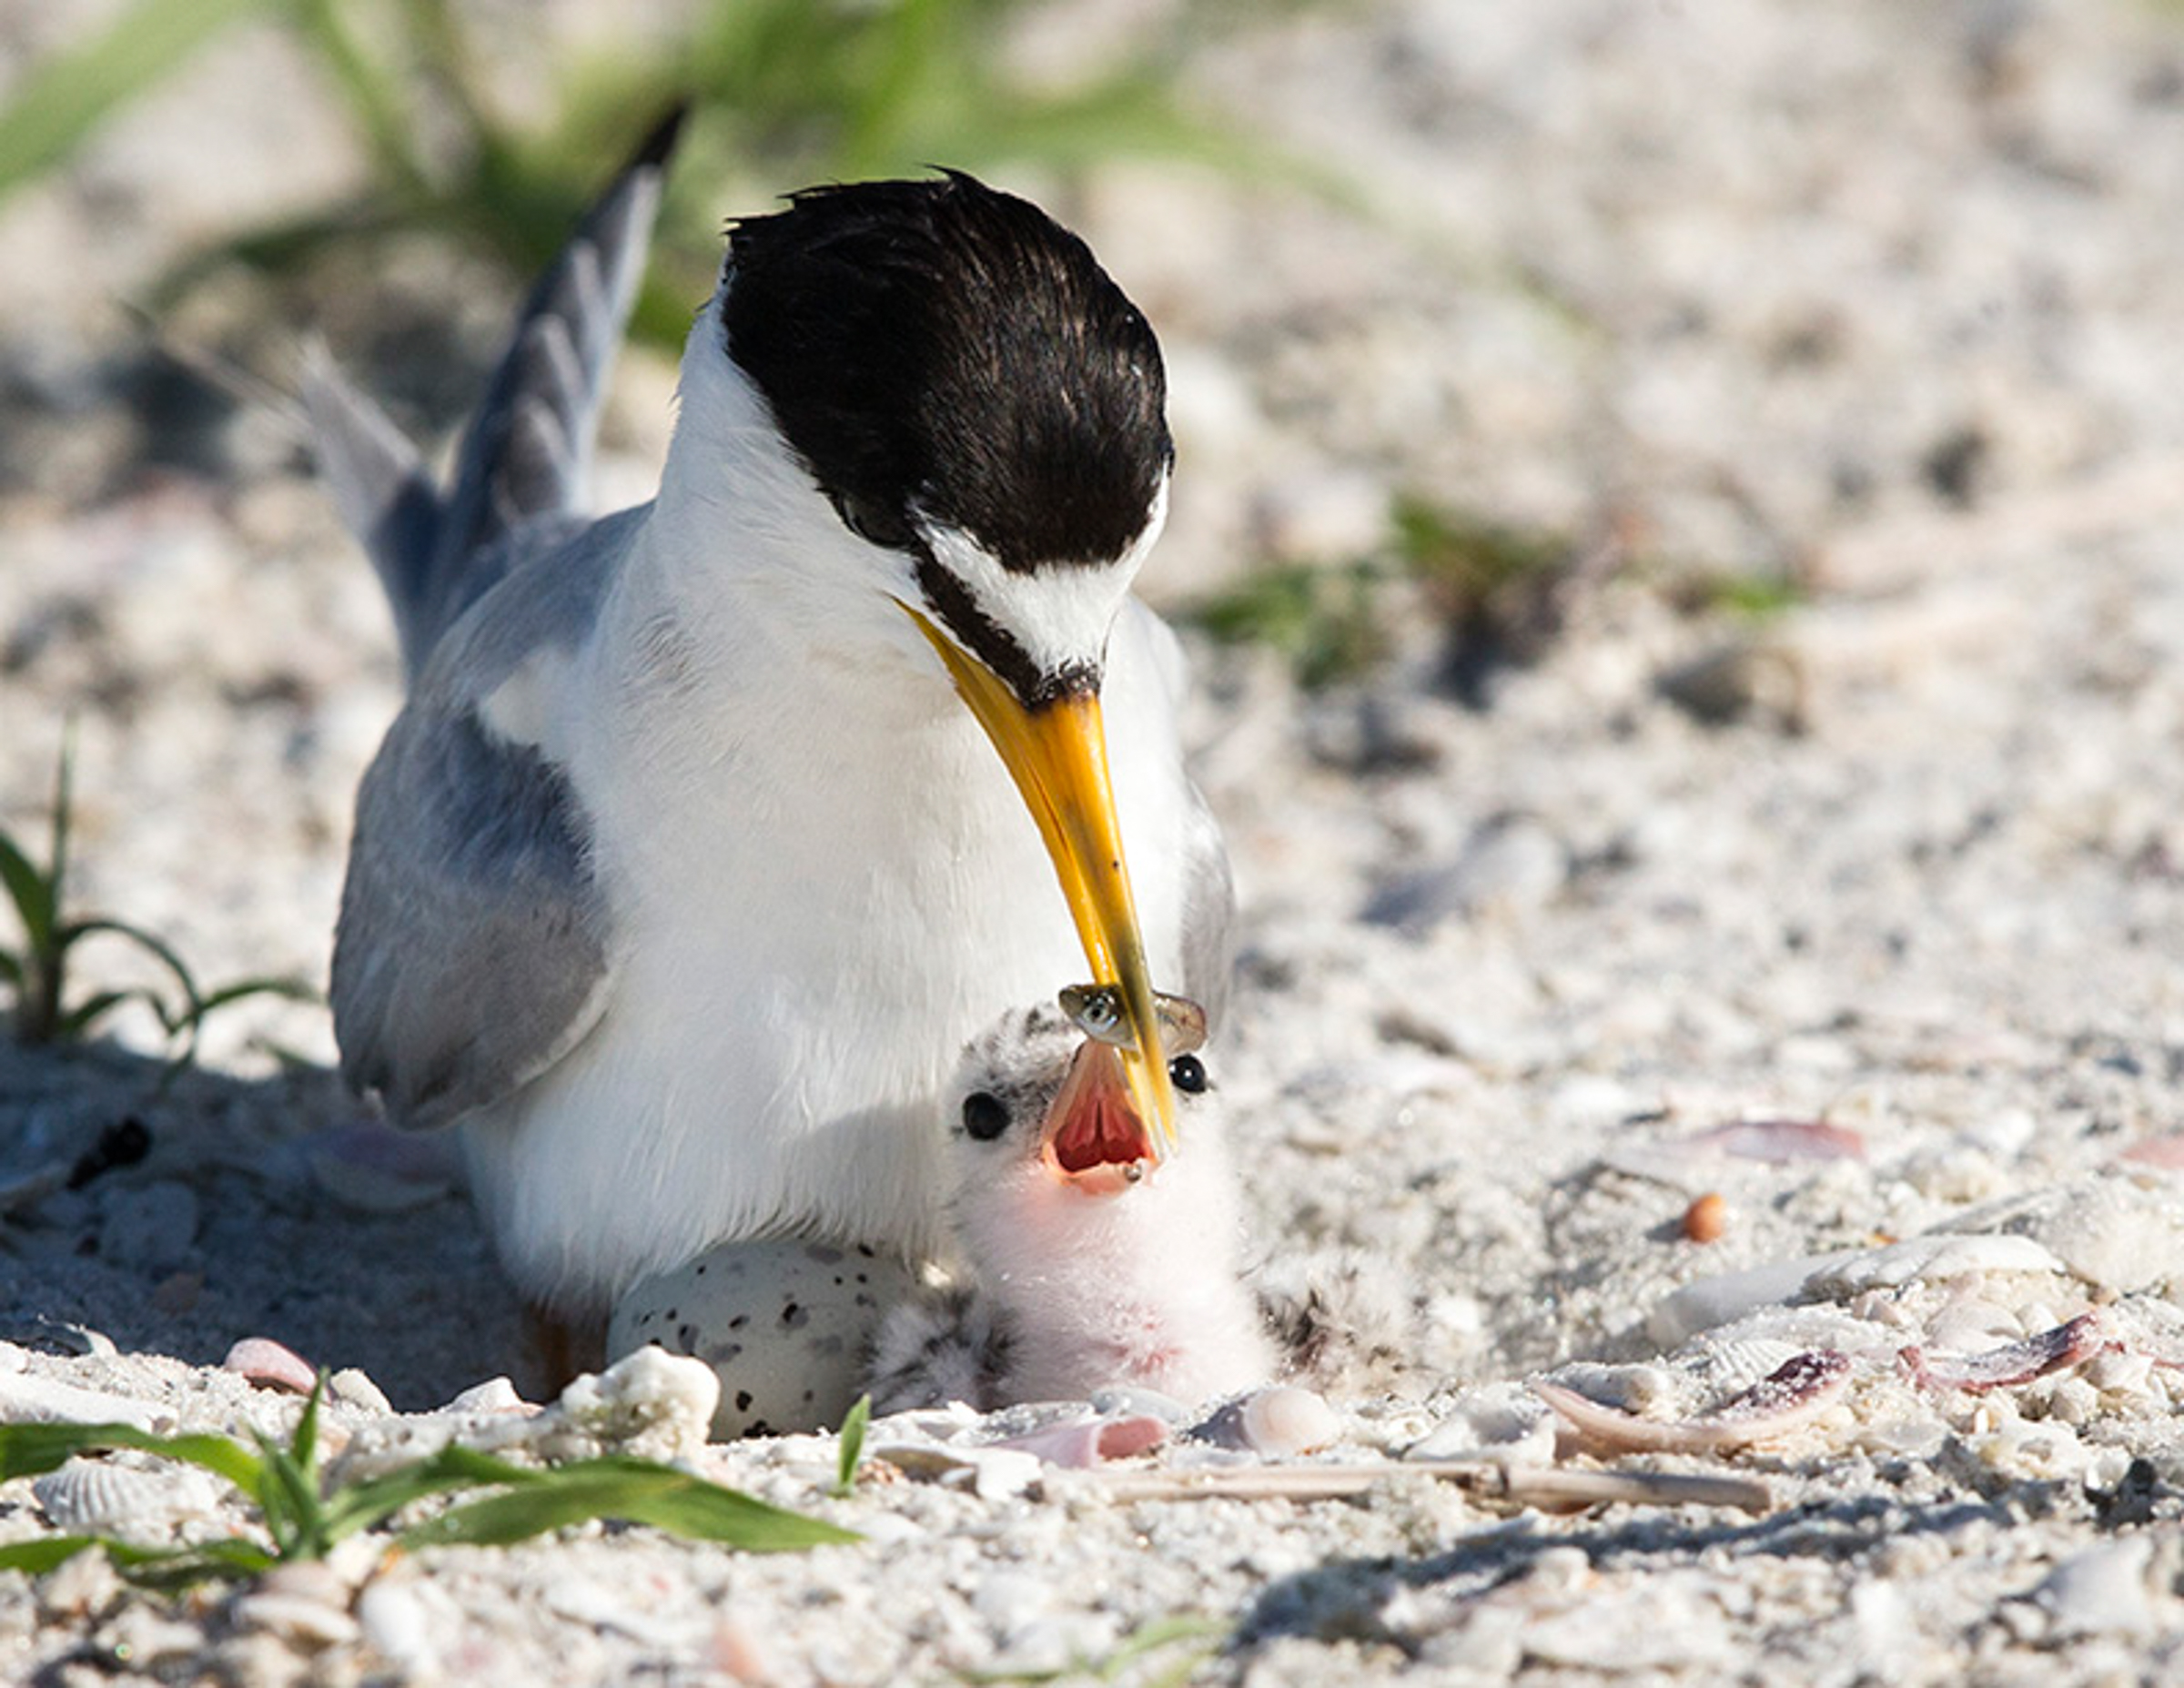 Least Tern feeds a chick on the beach.